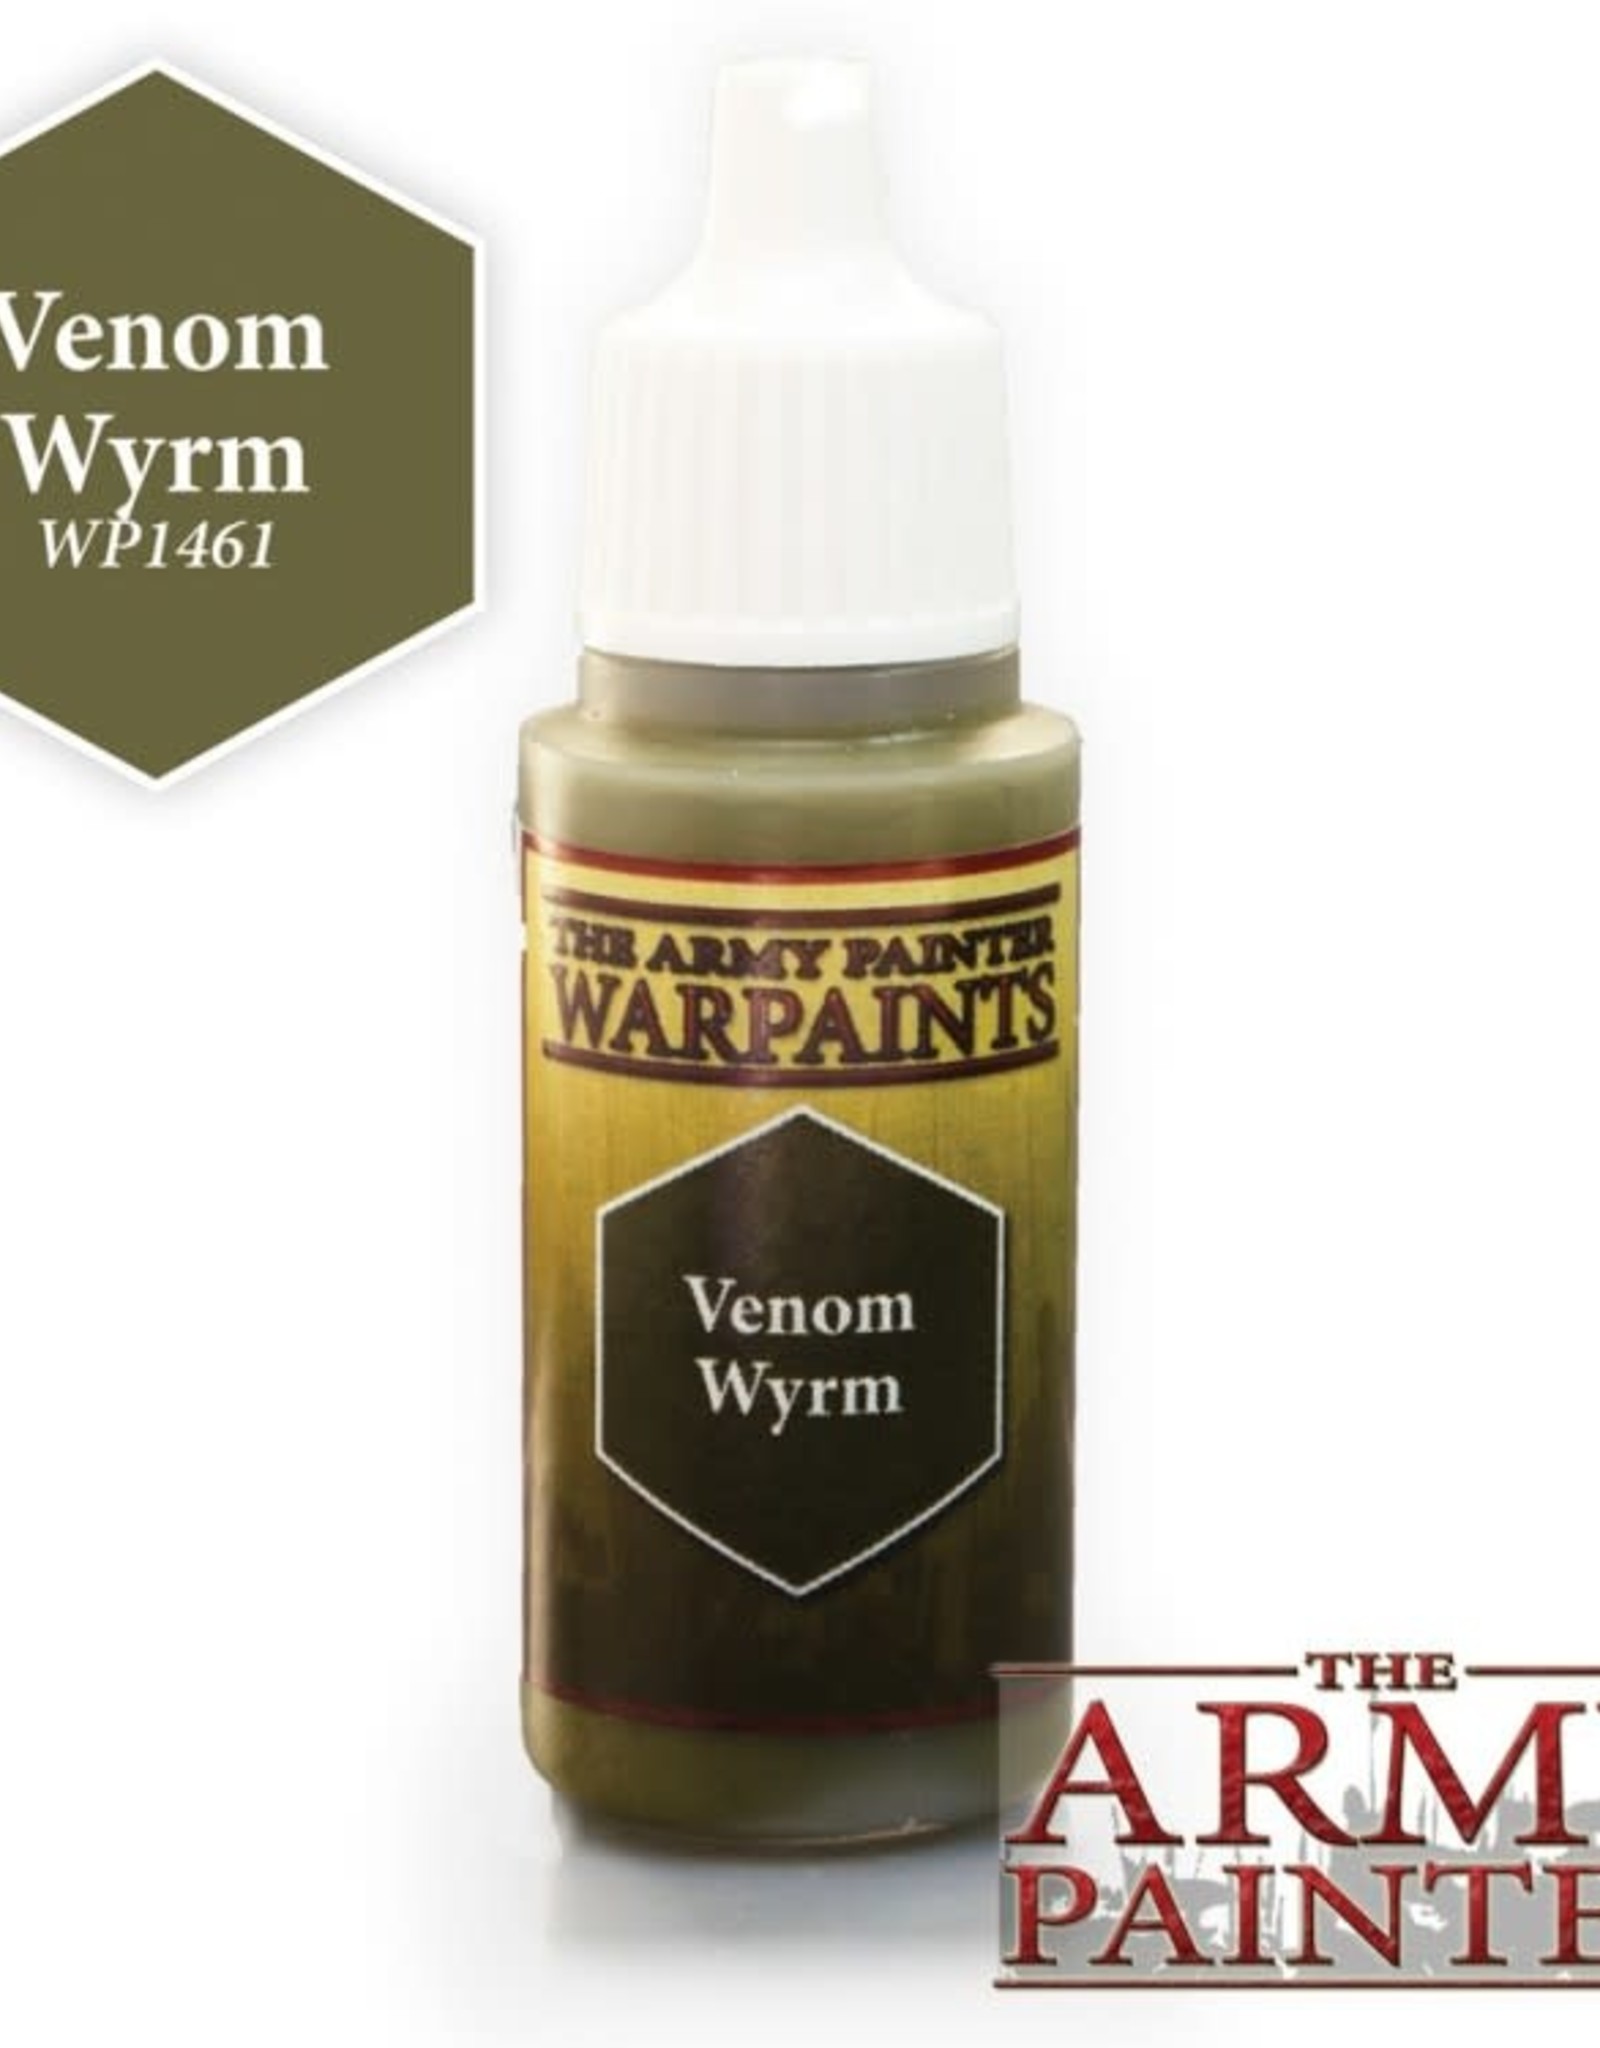 The Army Painter Warpaints - Venom Wyrm